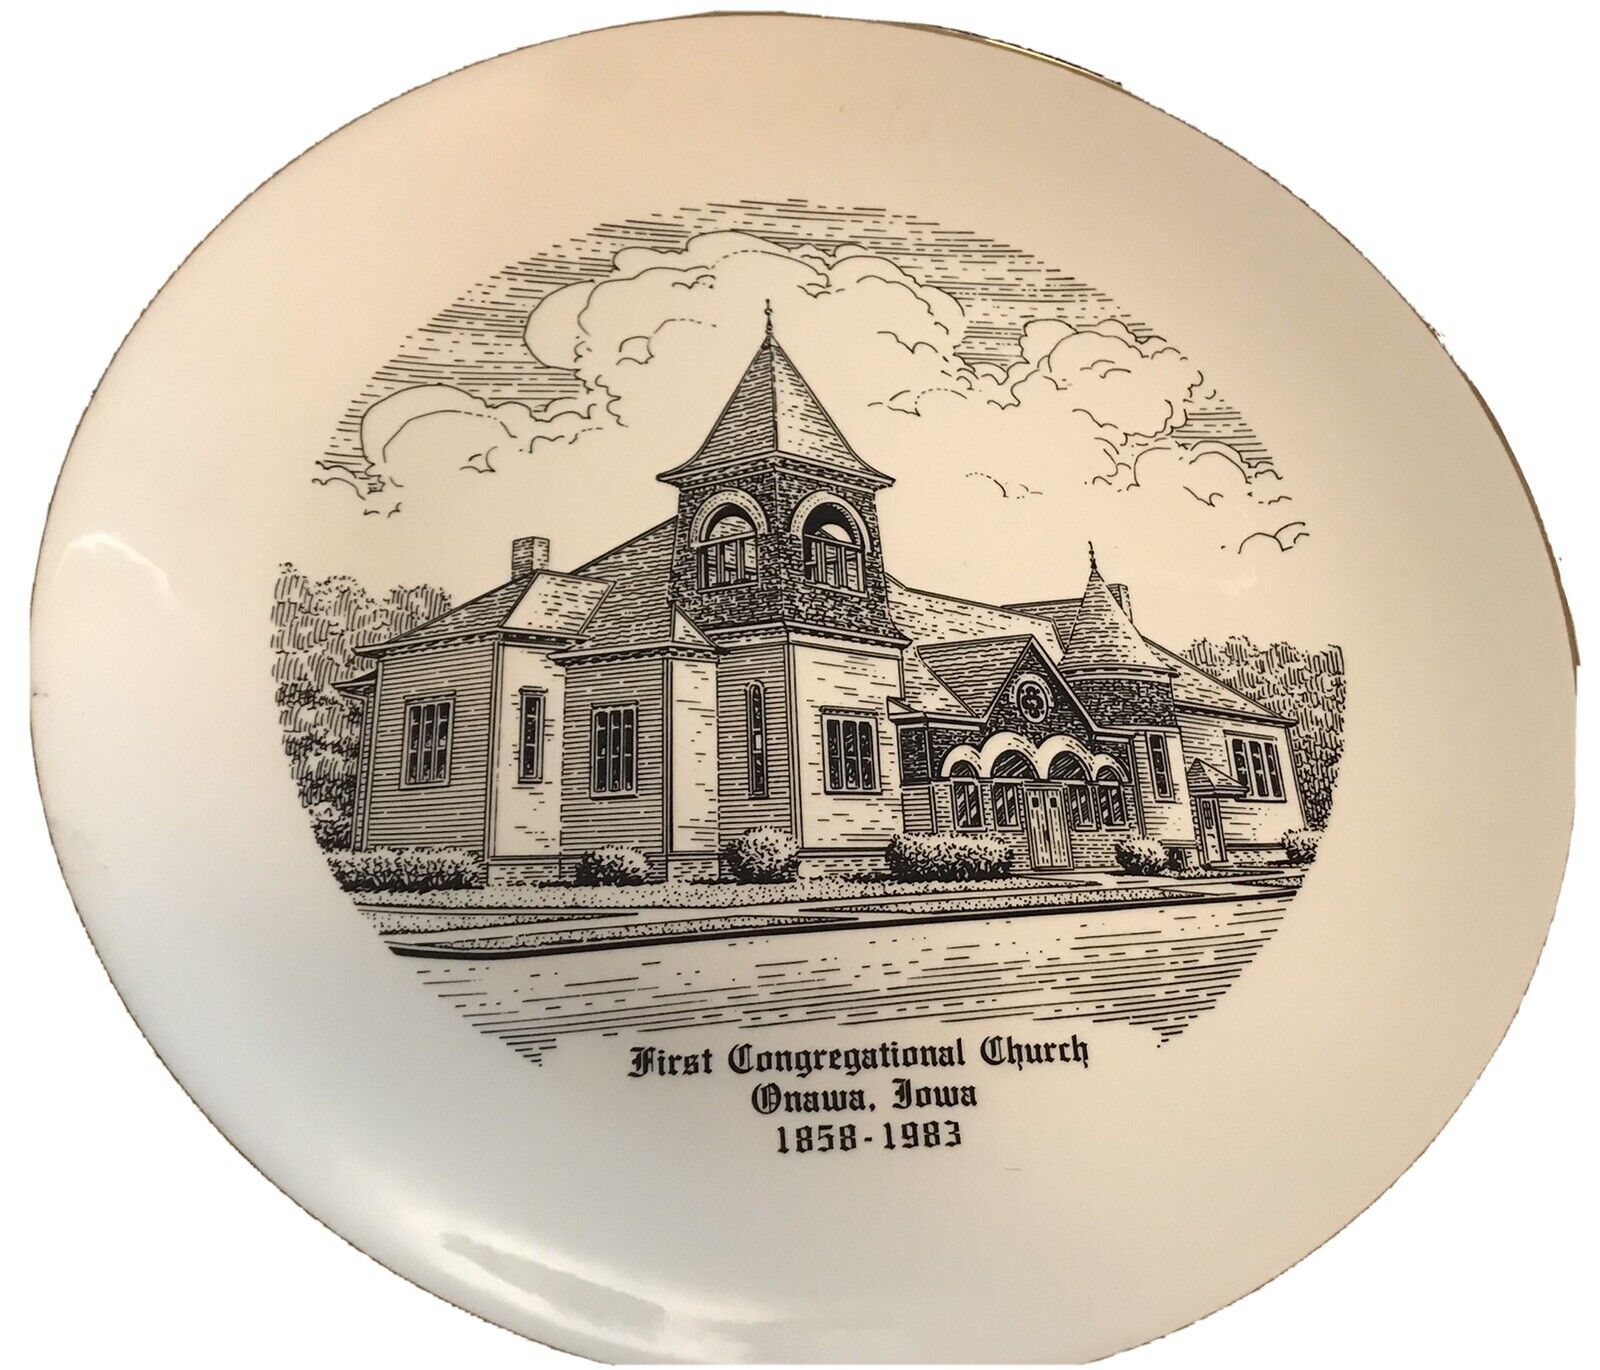 Vtg First Congregational church Onawa Iowa Souvenir Plate 1858-1983 